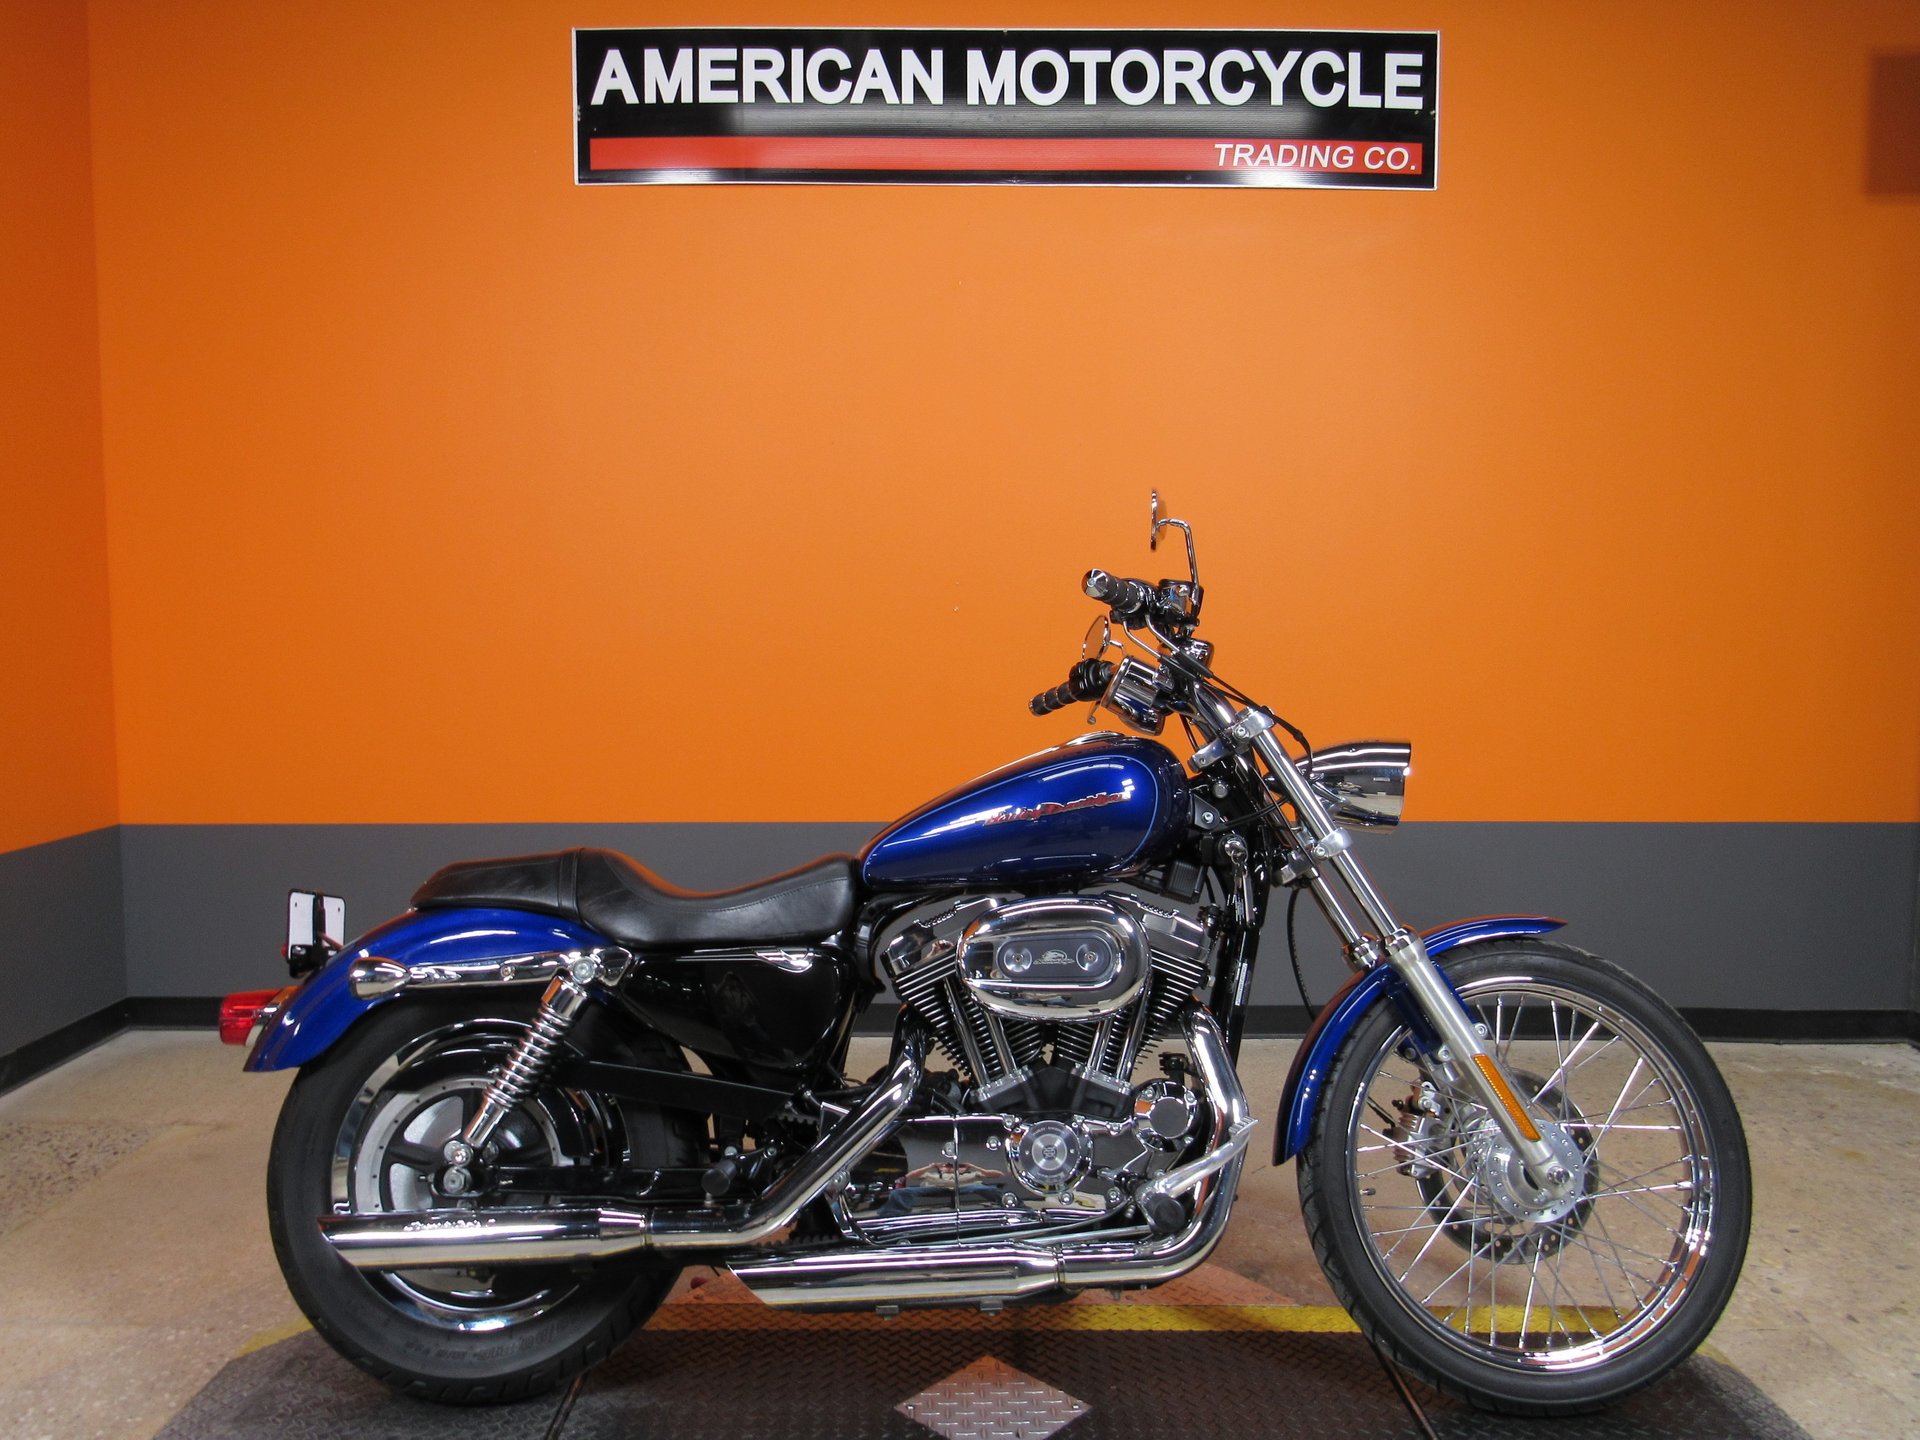 2006 Harley-Davidson Sportster 1200 | American Motorcycle Trading Company -  Used Harley Davidson Motorcycles